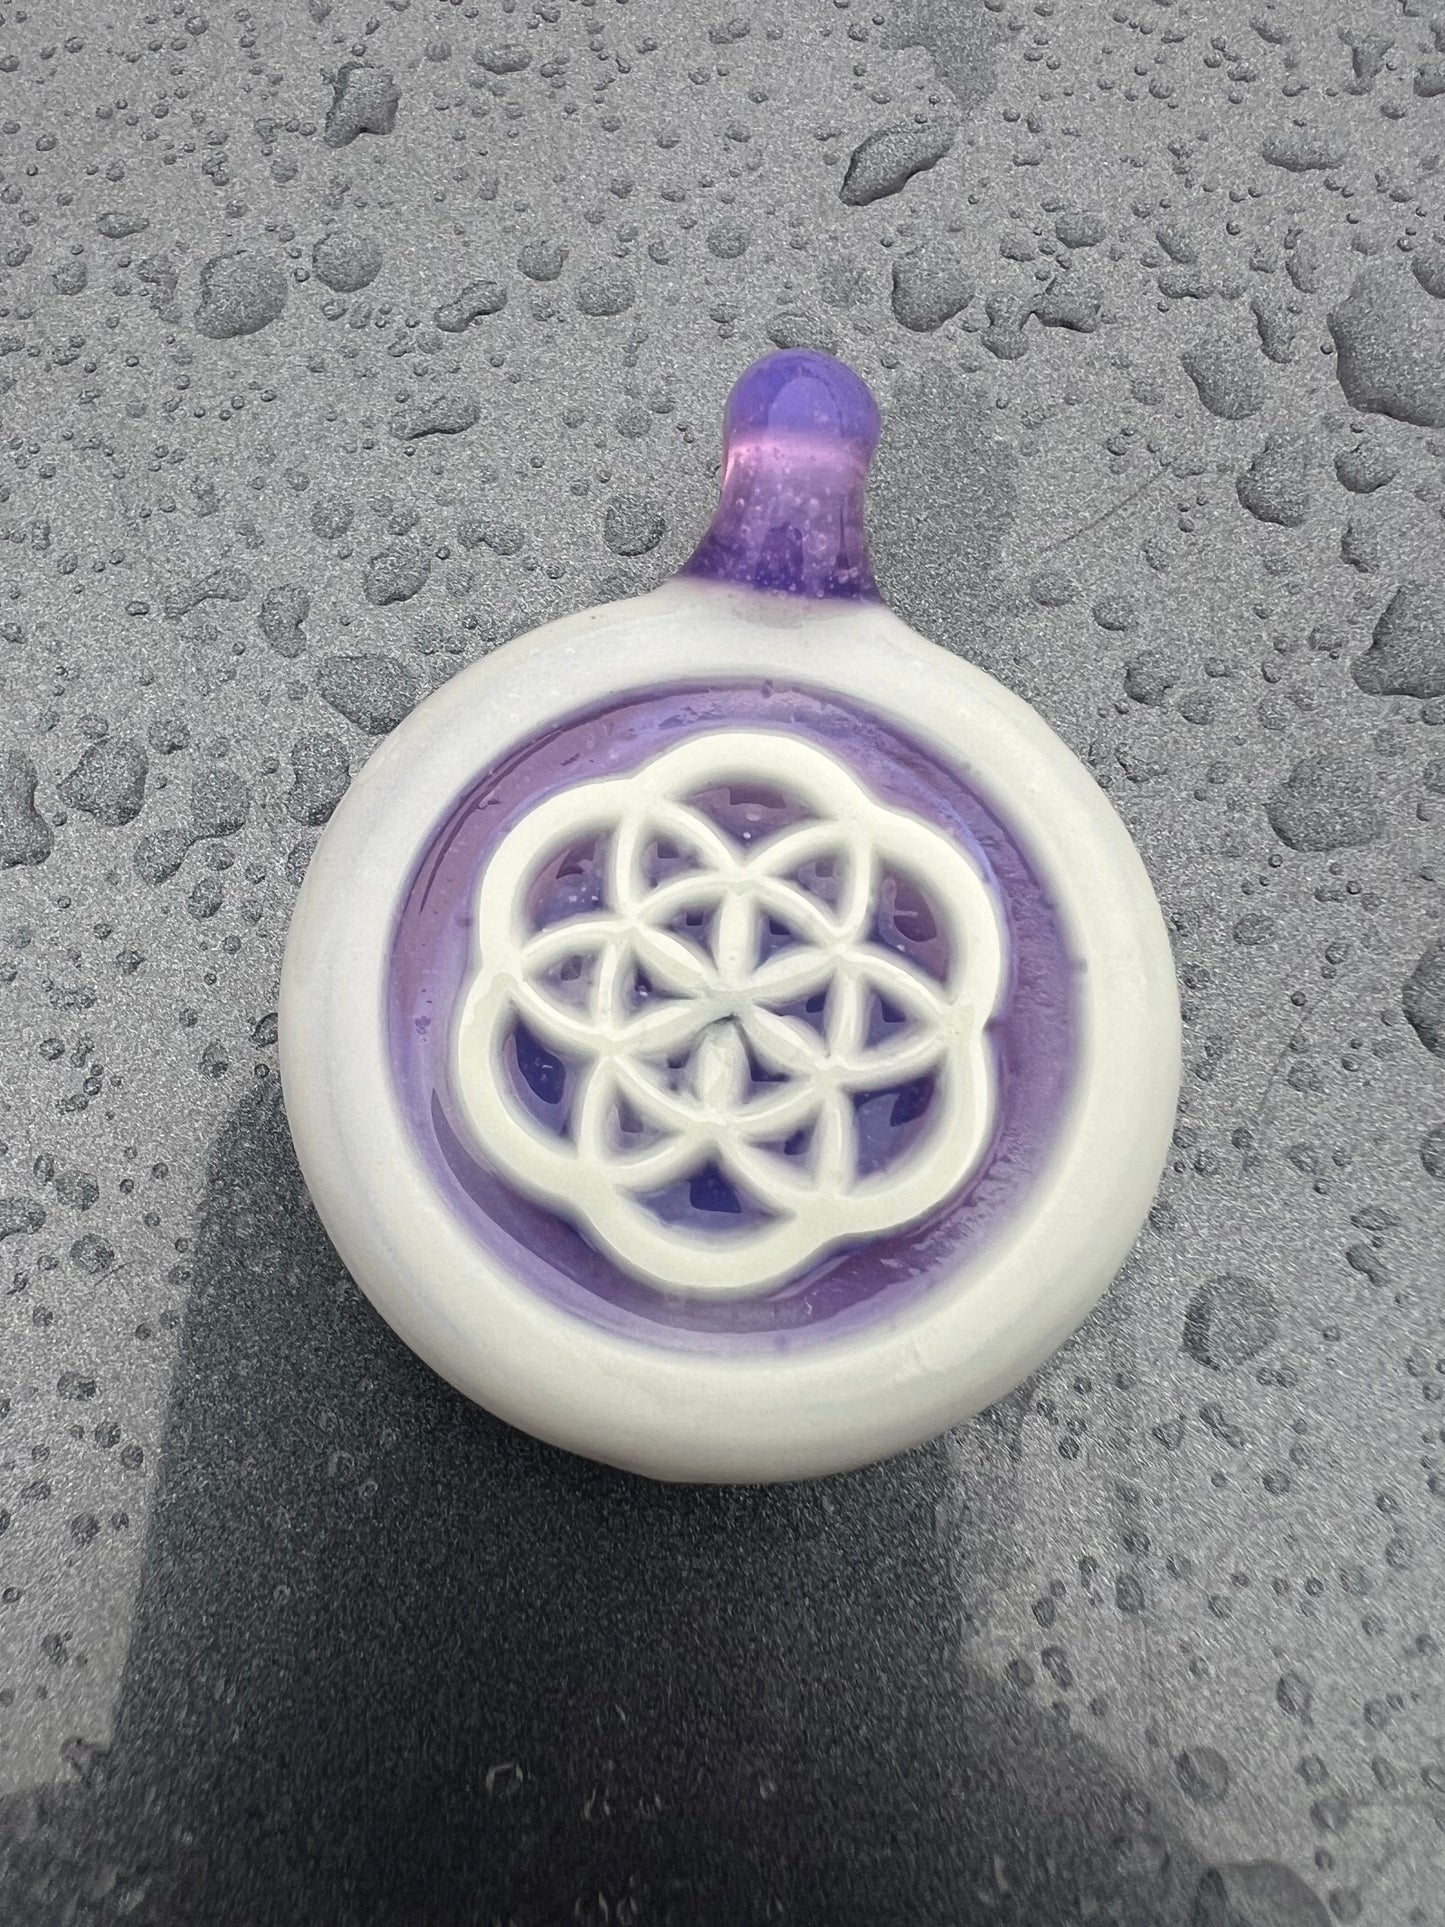 Sacred geometry custom pendant